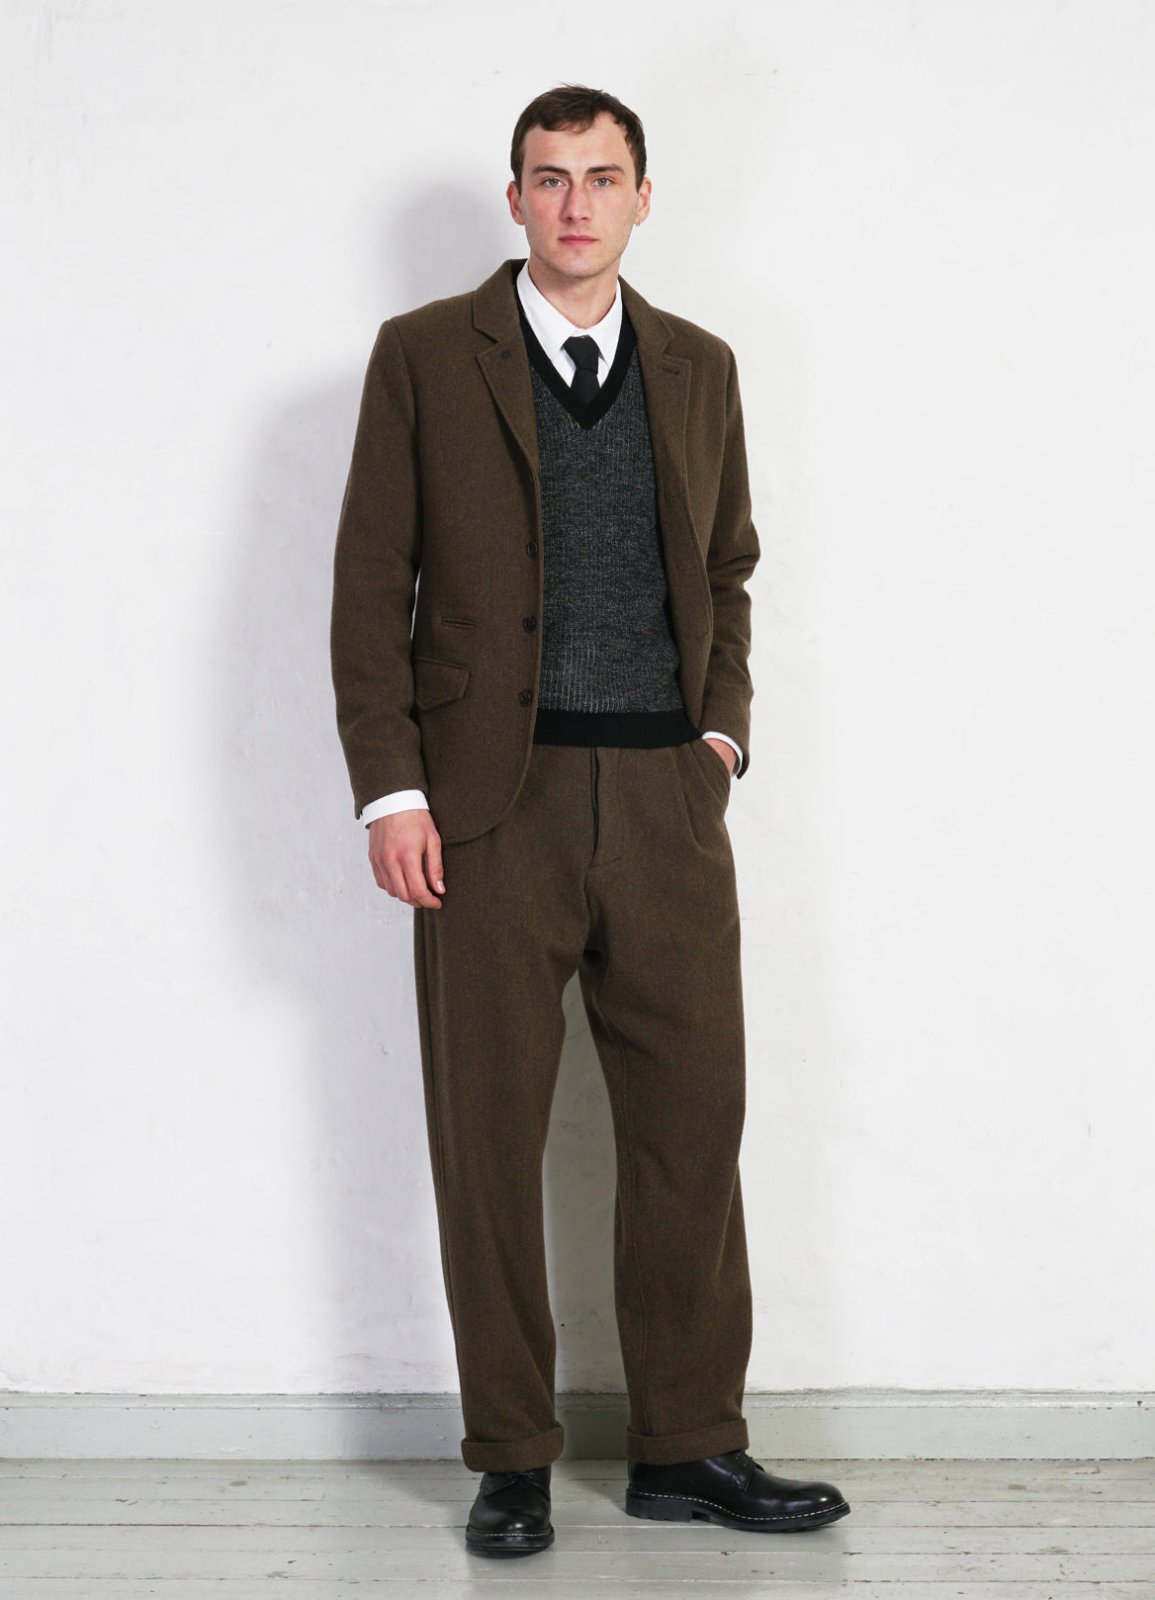 HANSEN GARMENTS - ANKER | Four Button Classic Blazer | Brown Herringbone - HANSEN Garments